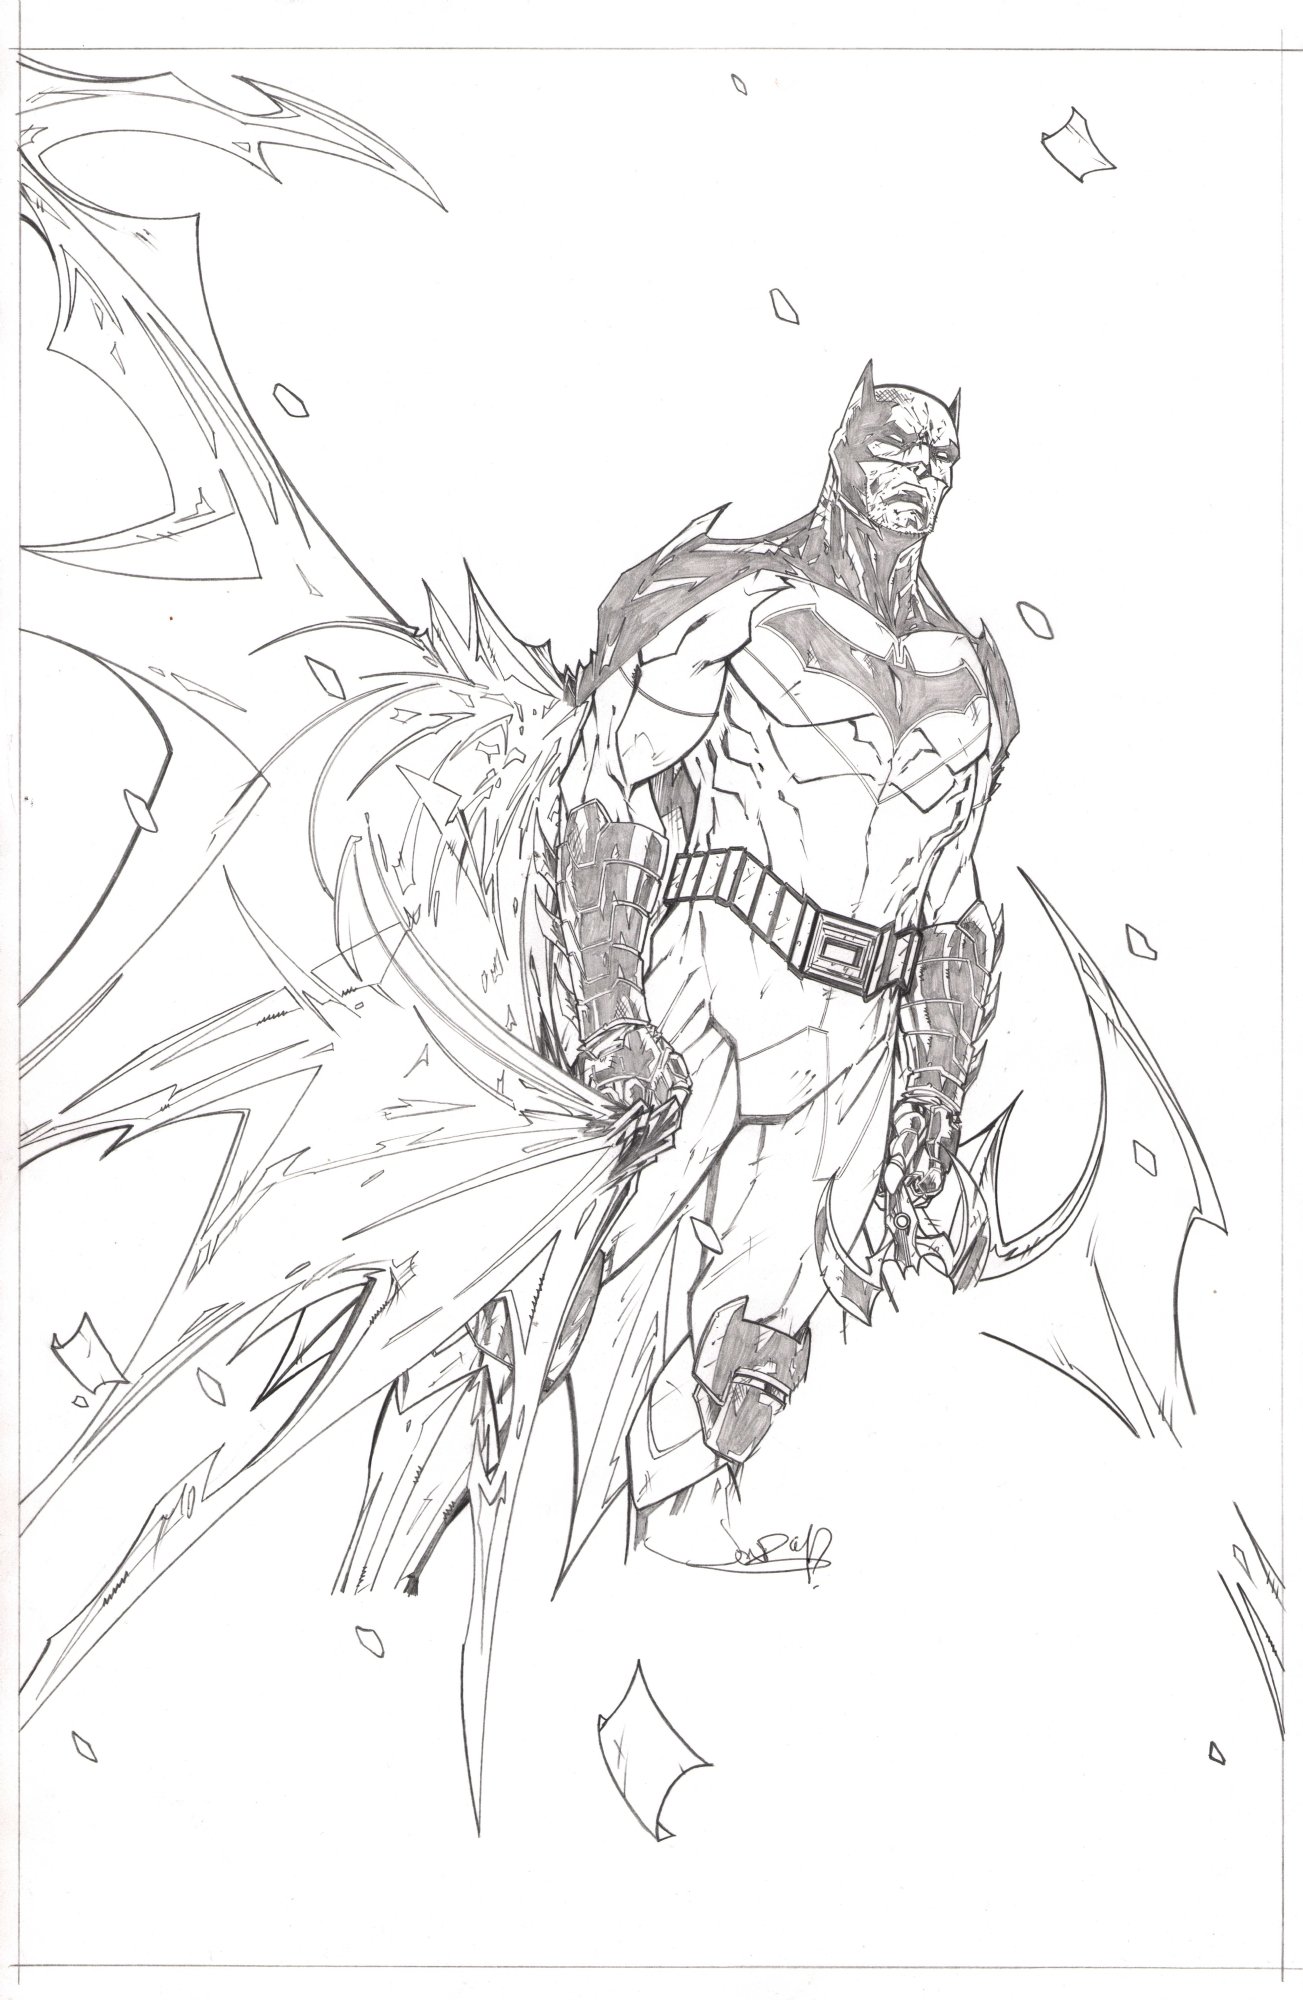 Batman In Jason Vignolas Commissions Pencils Comic Art Gallery Room 8806